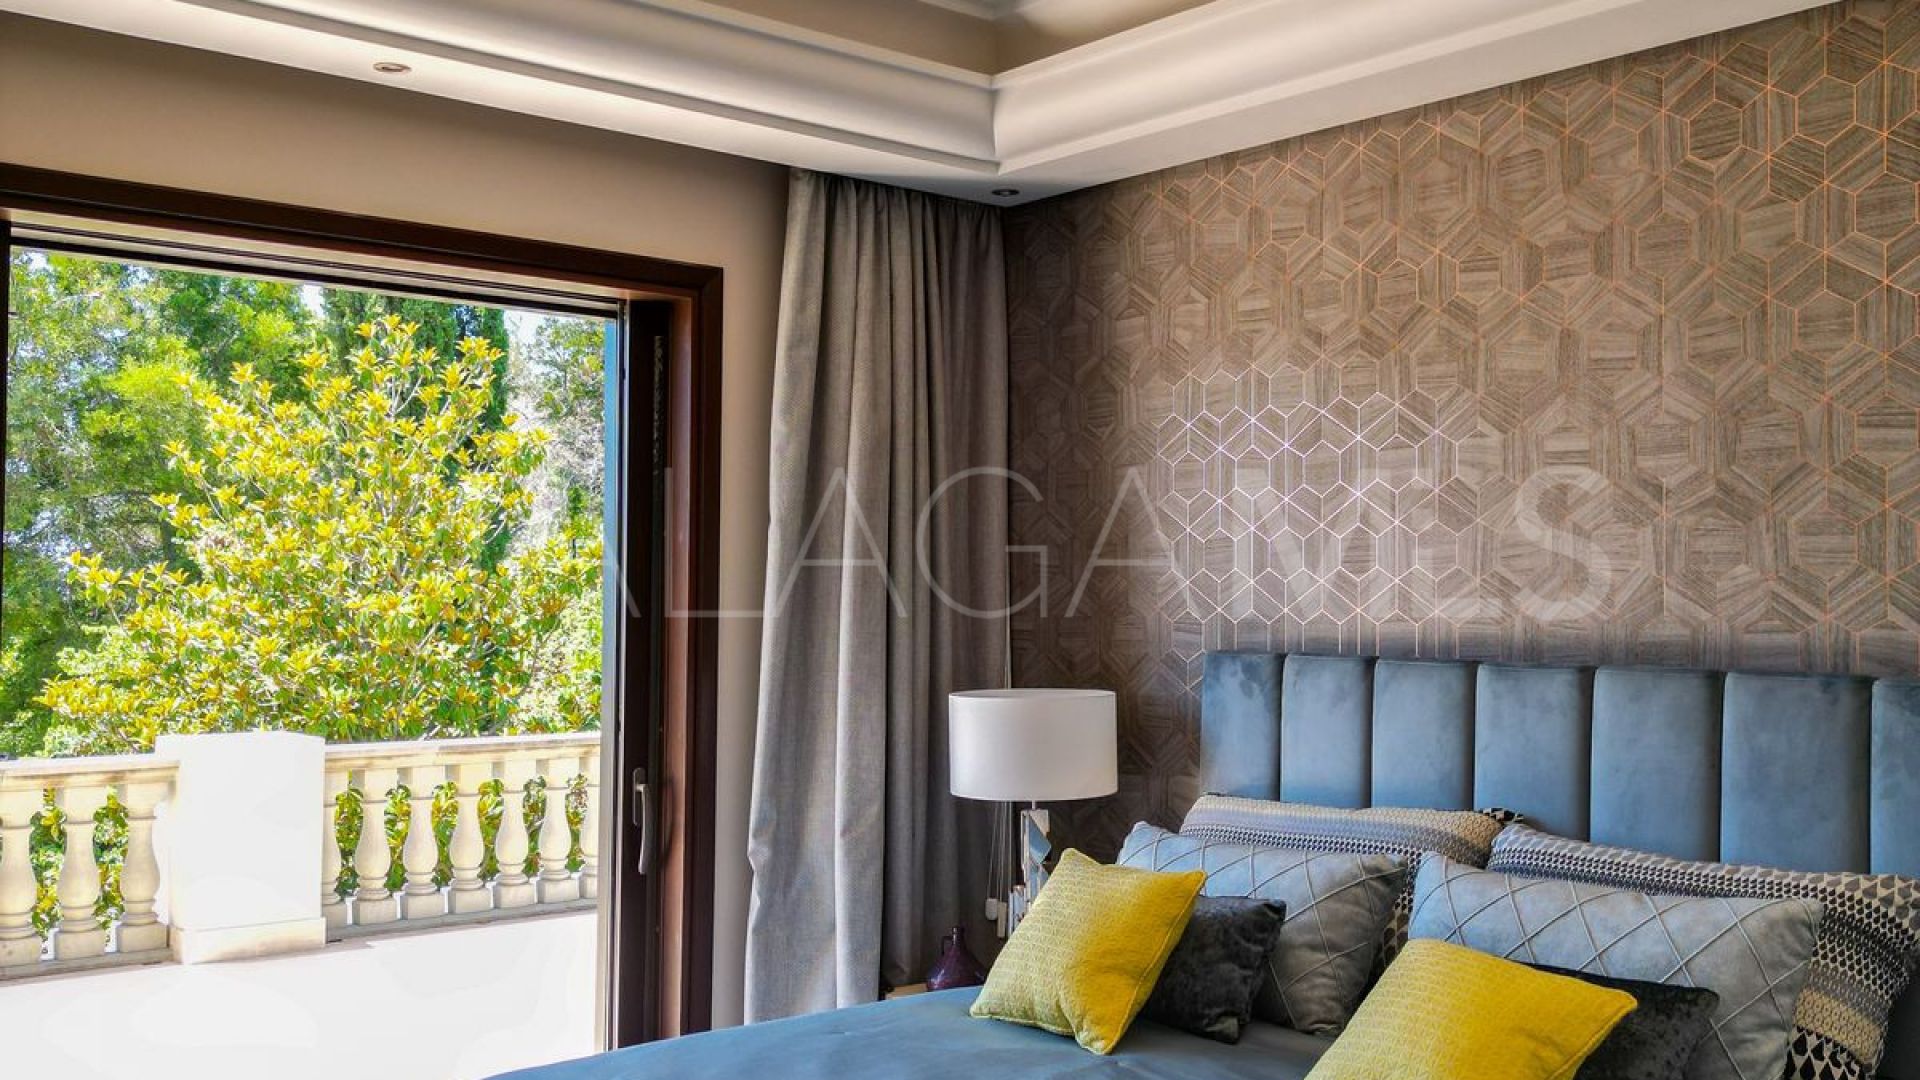 Villa for sale in La Zagaleta with 9 bedrooms